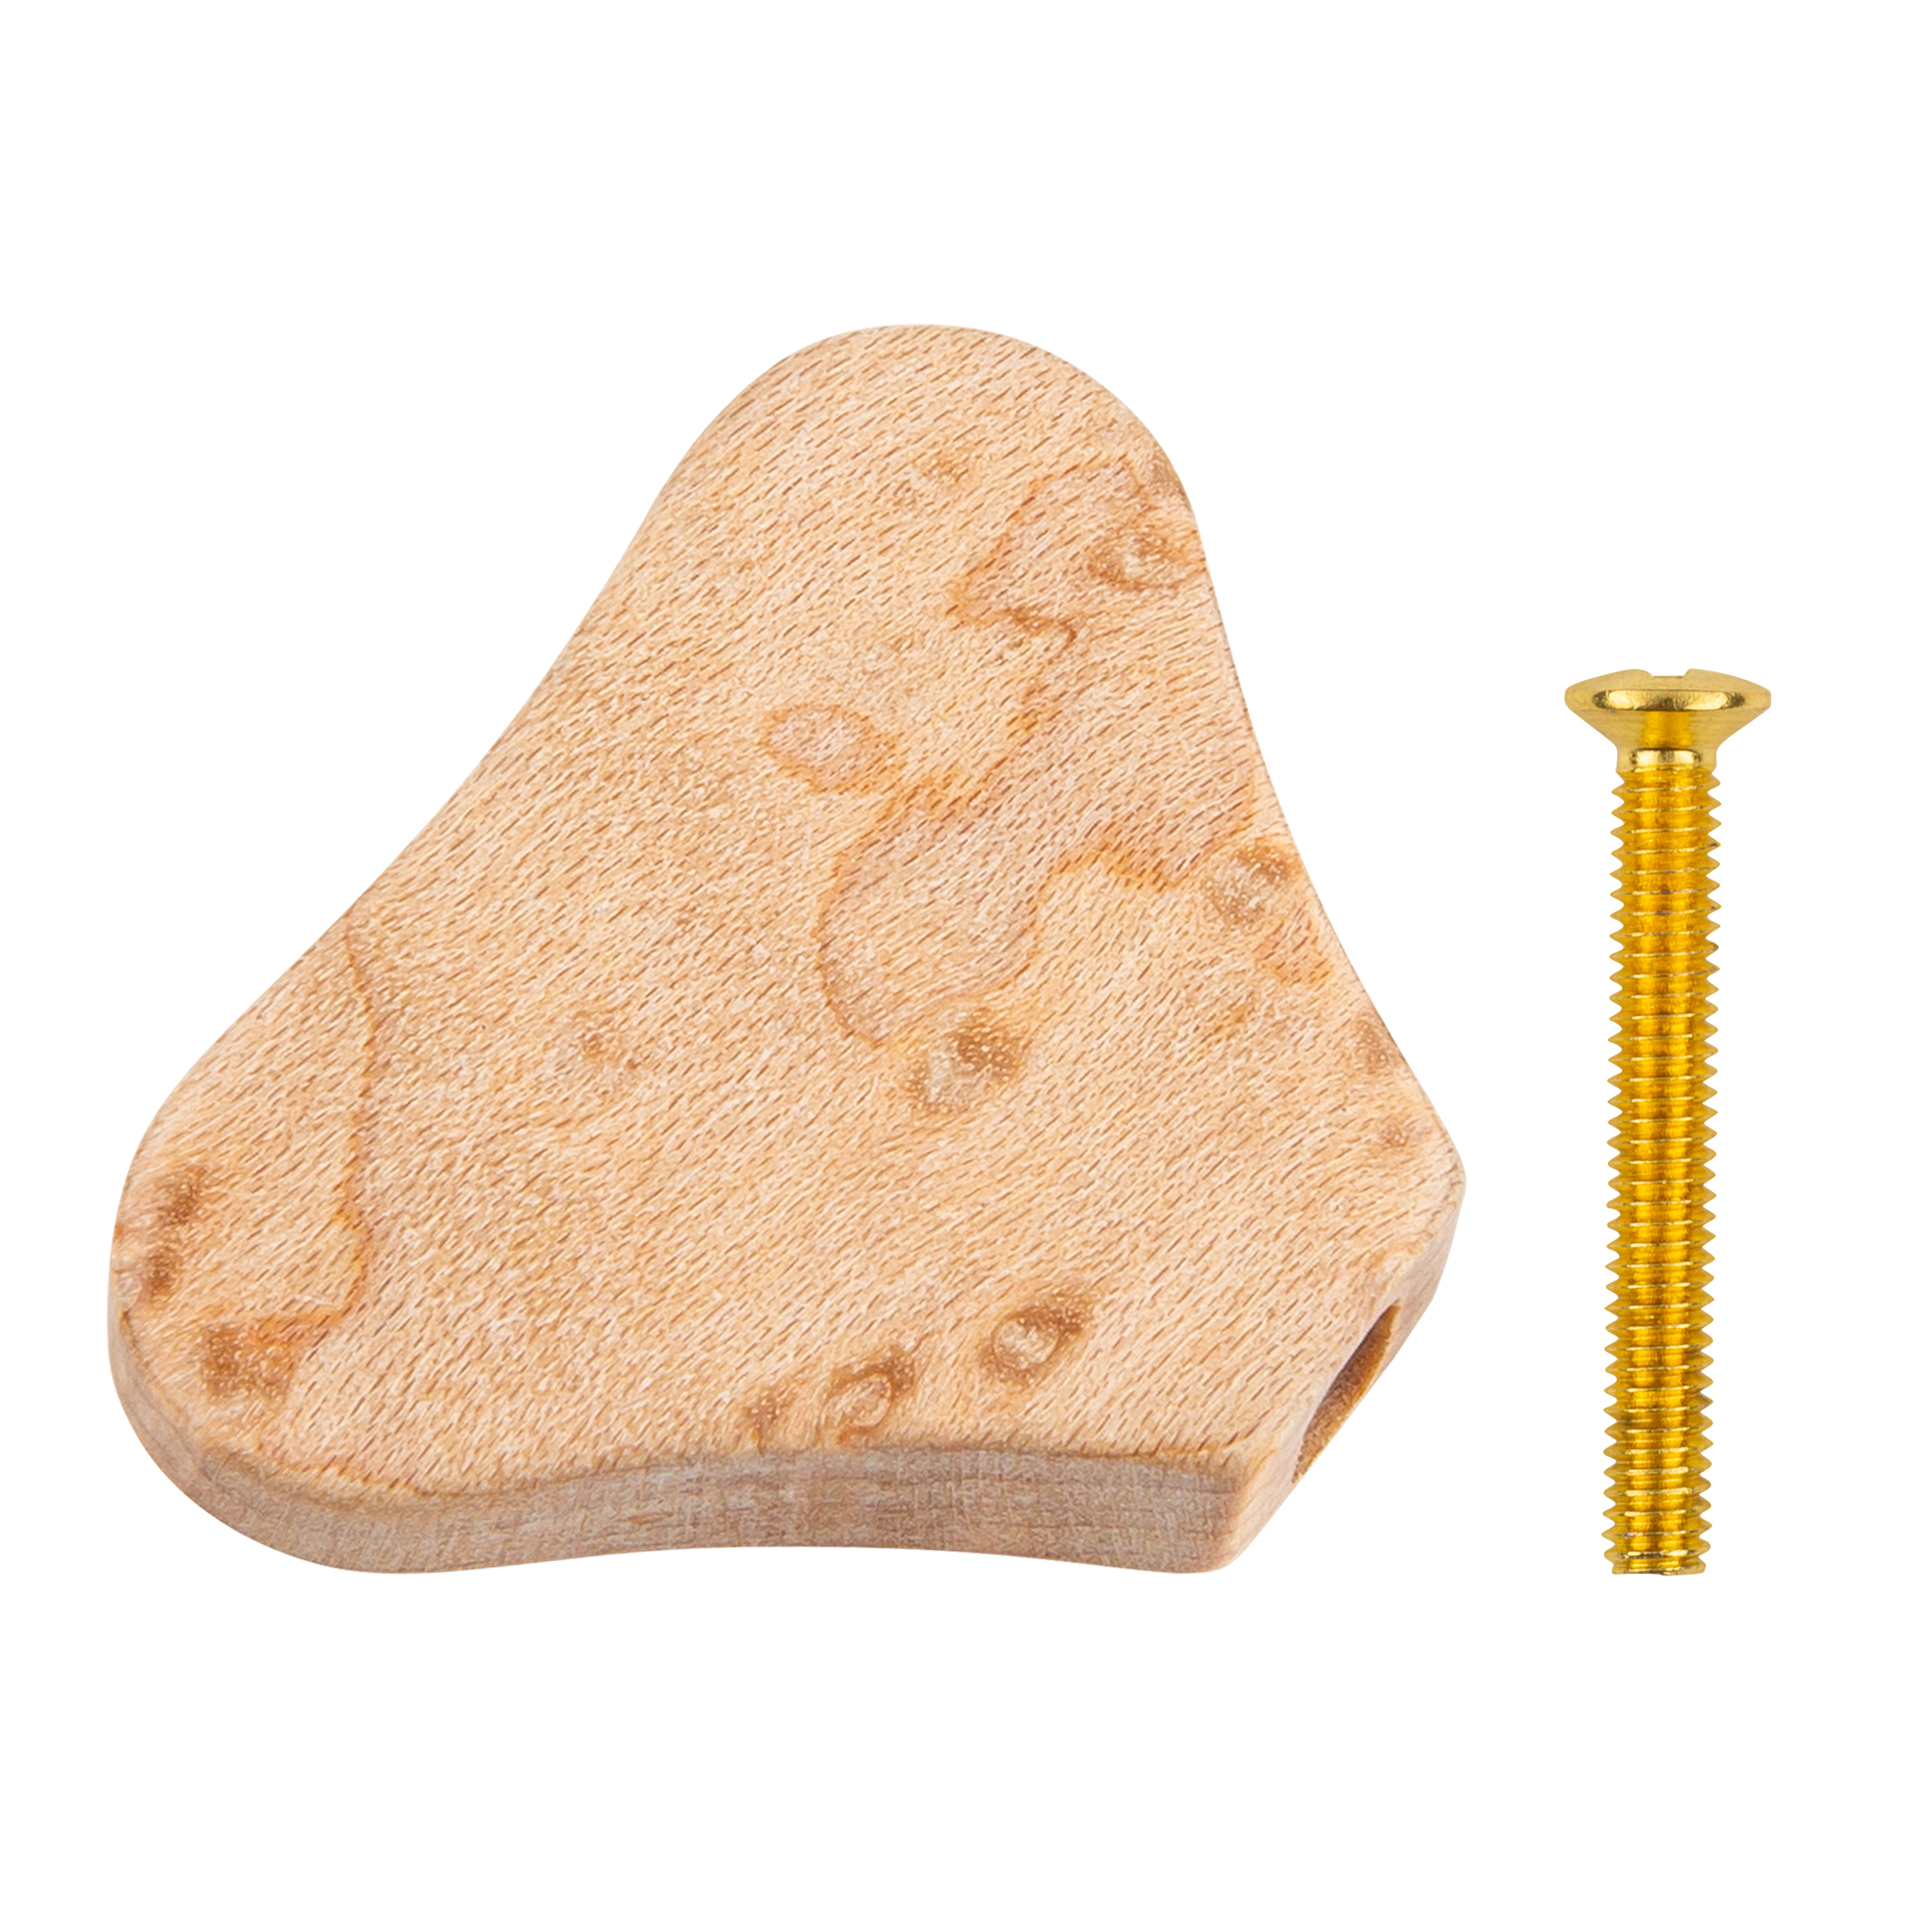 Warwick Parts - Wooden Peg for Warwick Machine Heads - Birdseye Maple (with Gold Screw)